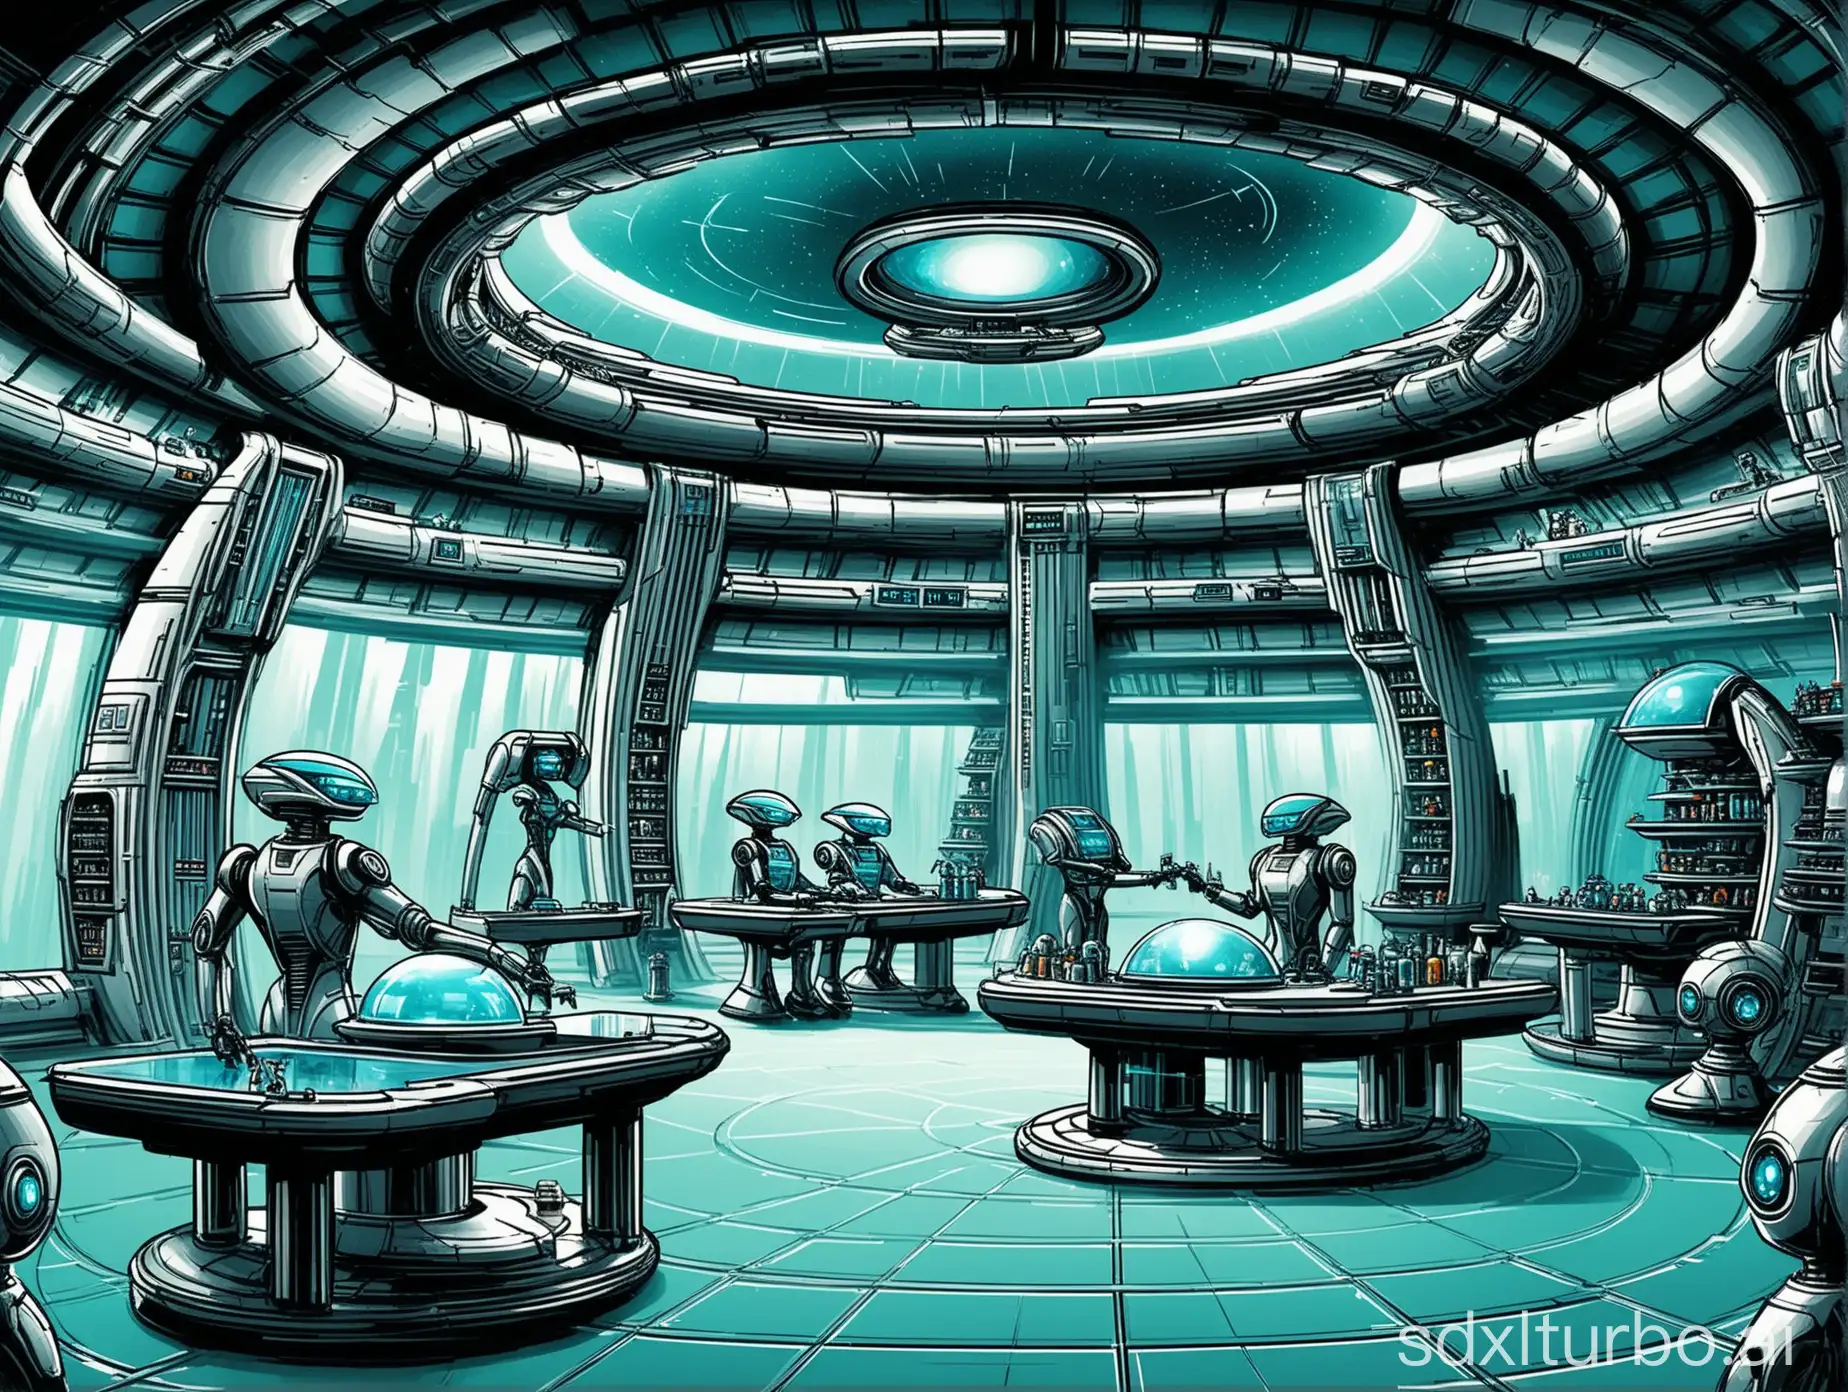 Futuristic-Laboratory-with-Robots-in-Perry-Rhodan-Style